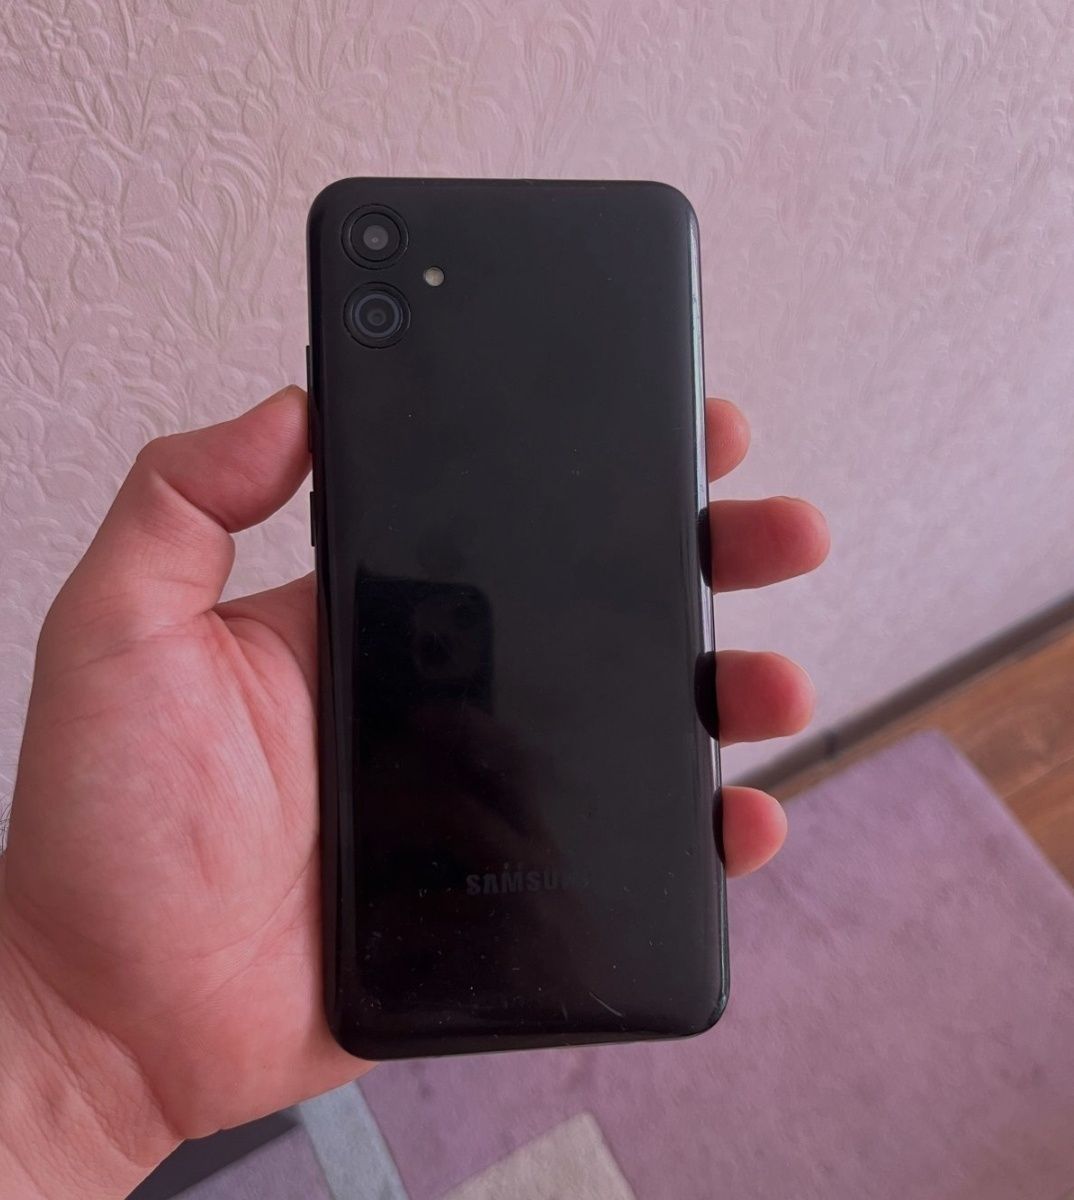 Samsung galaxy 04e black 64
Состояние отличное 
Мошный смартфон
Батаре